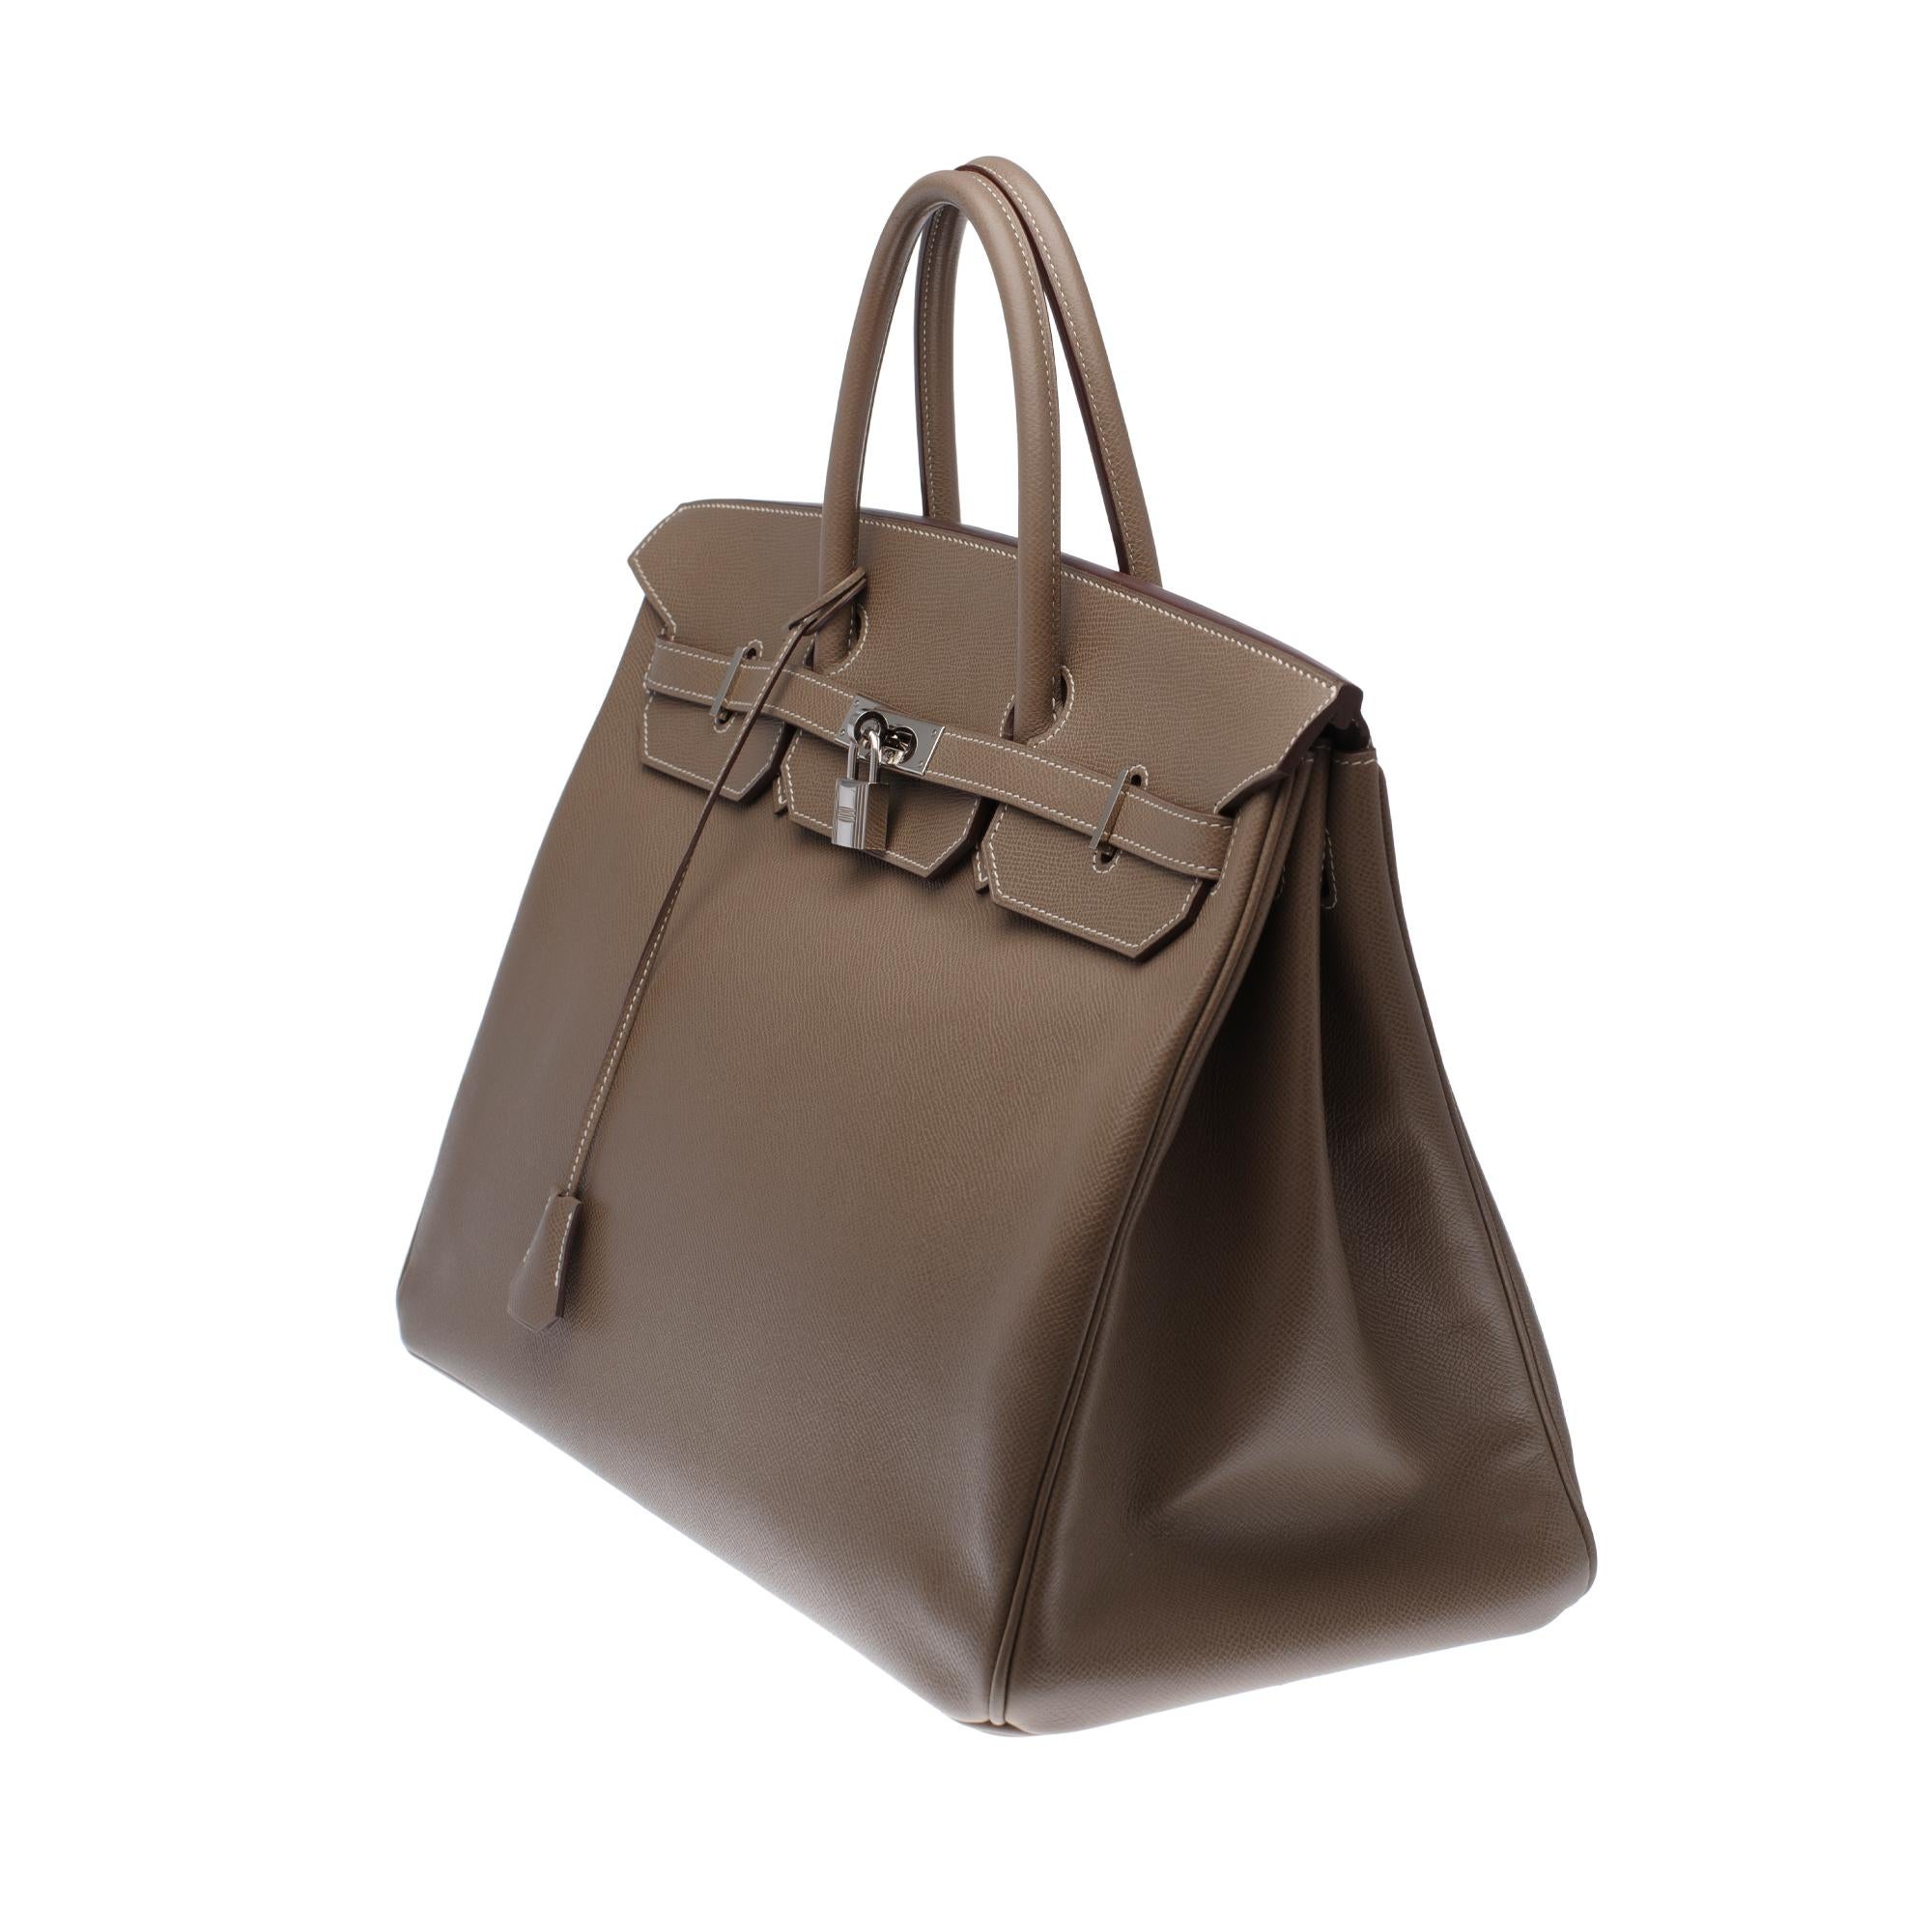 Gray Stunning Hermes Birkin 40cm handbag in Brown Togo leather with gold hardware